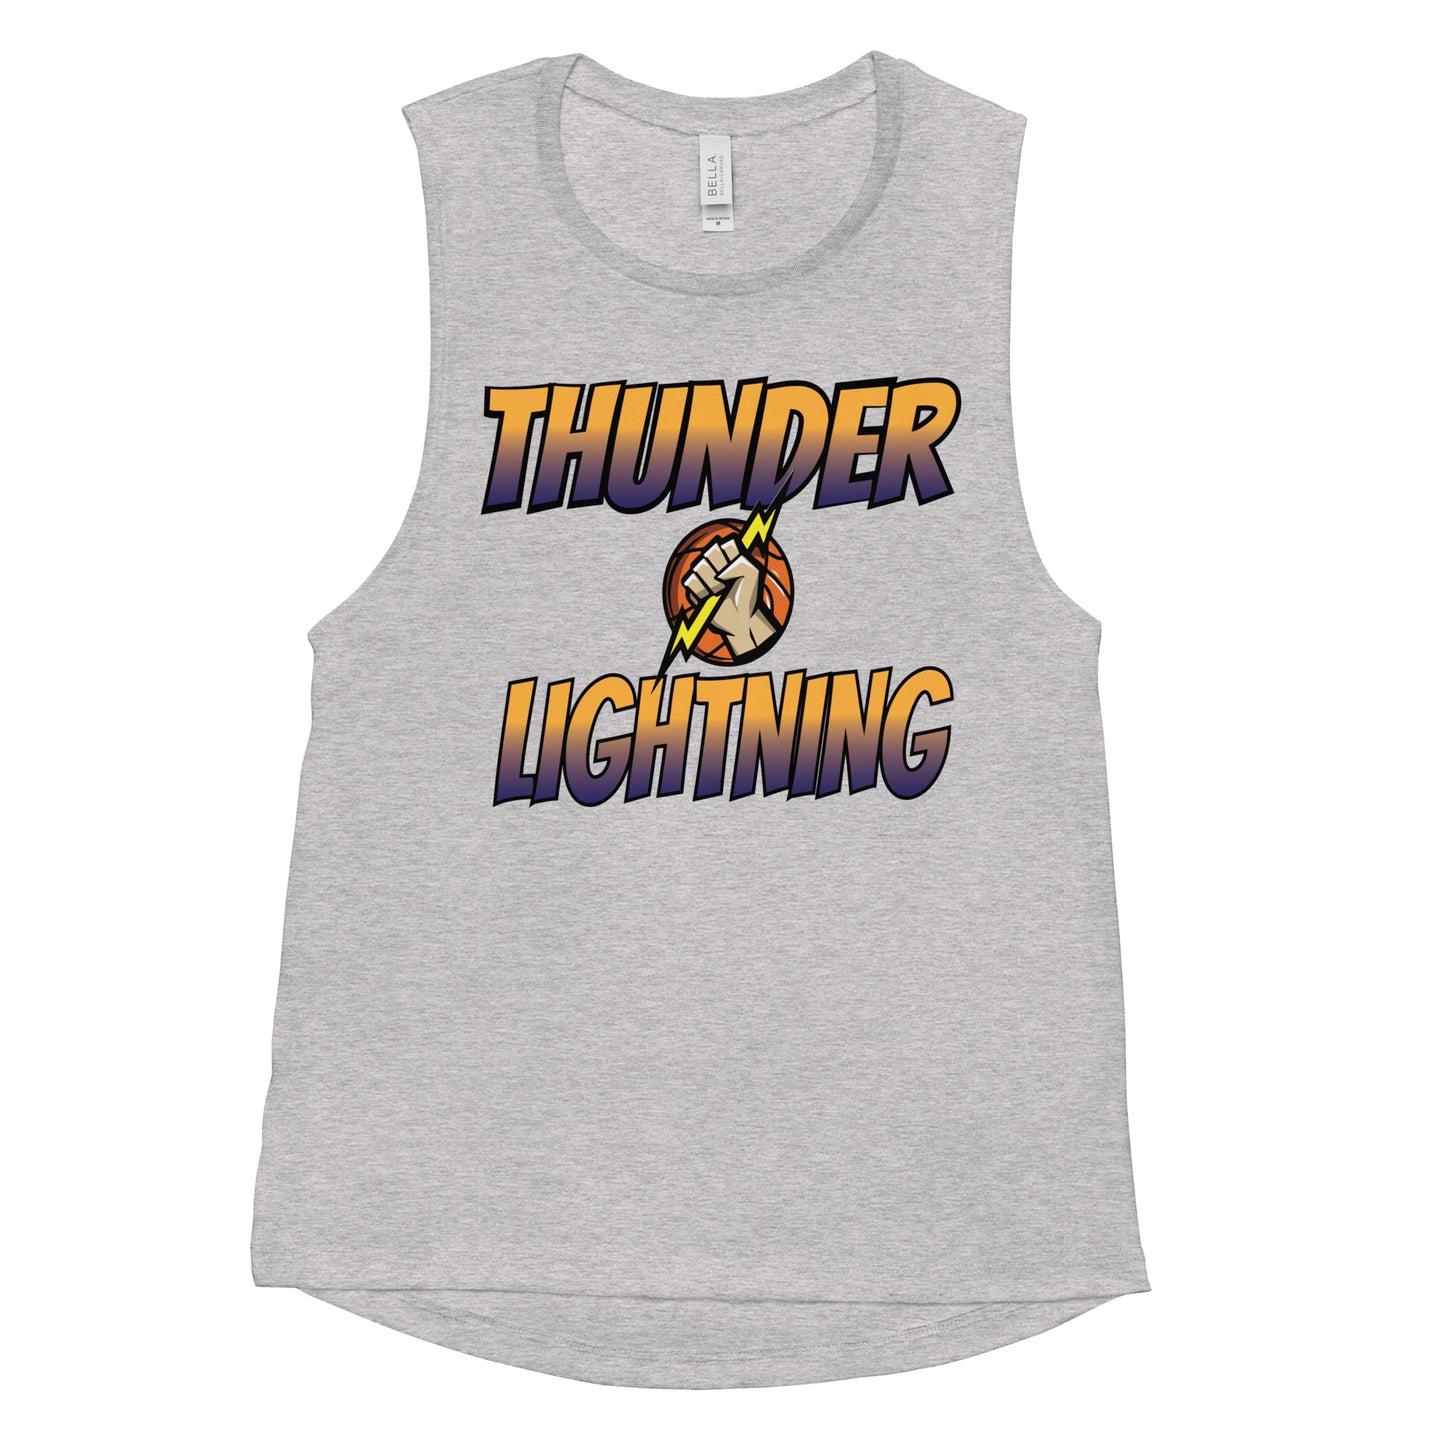 Thunder & Lightning Ladies’ Muscle Tank